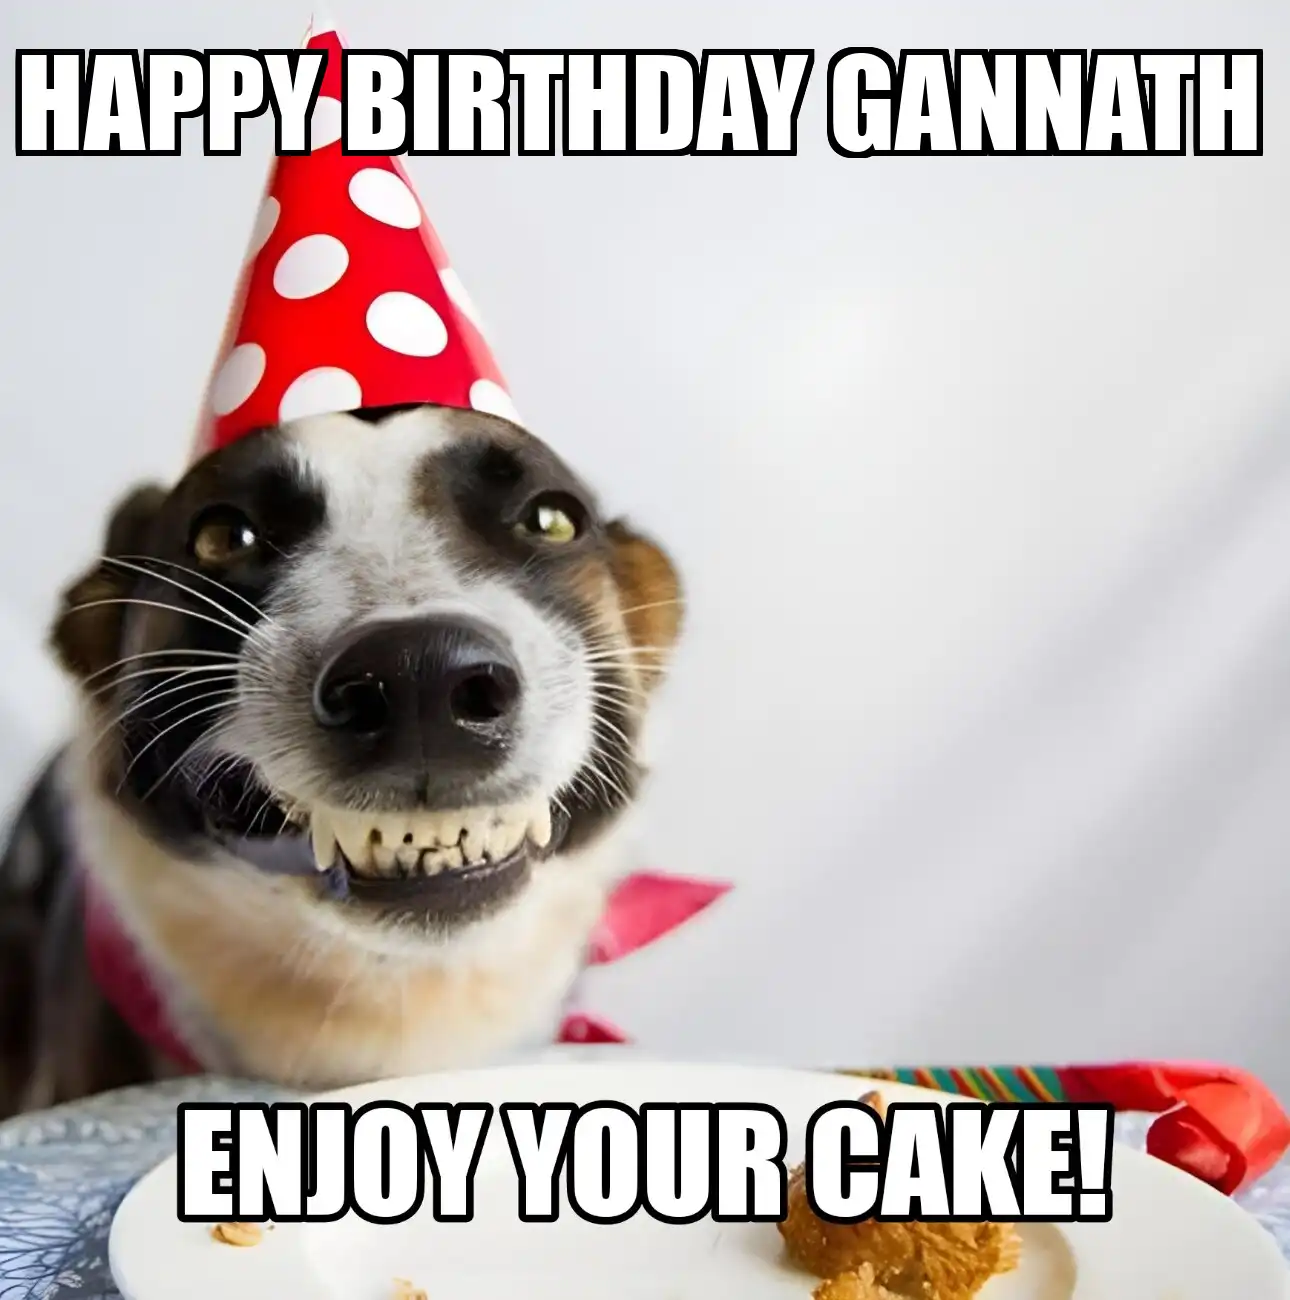 Happy Birthday Gannath Enjoy Your Cake Dog Meme